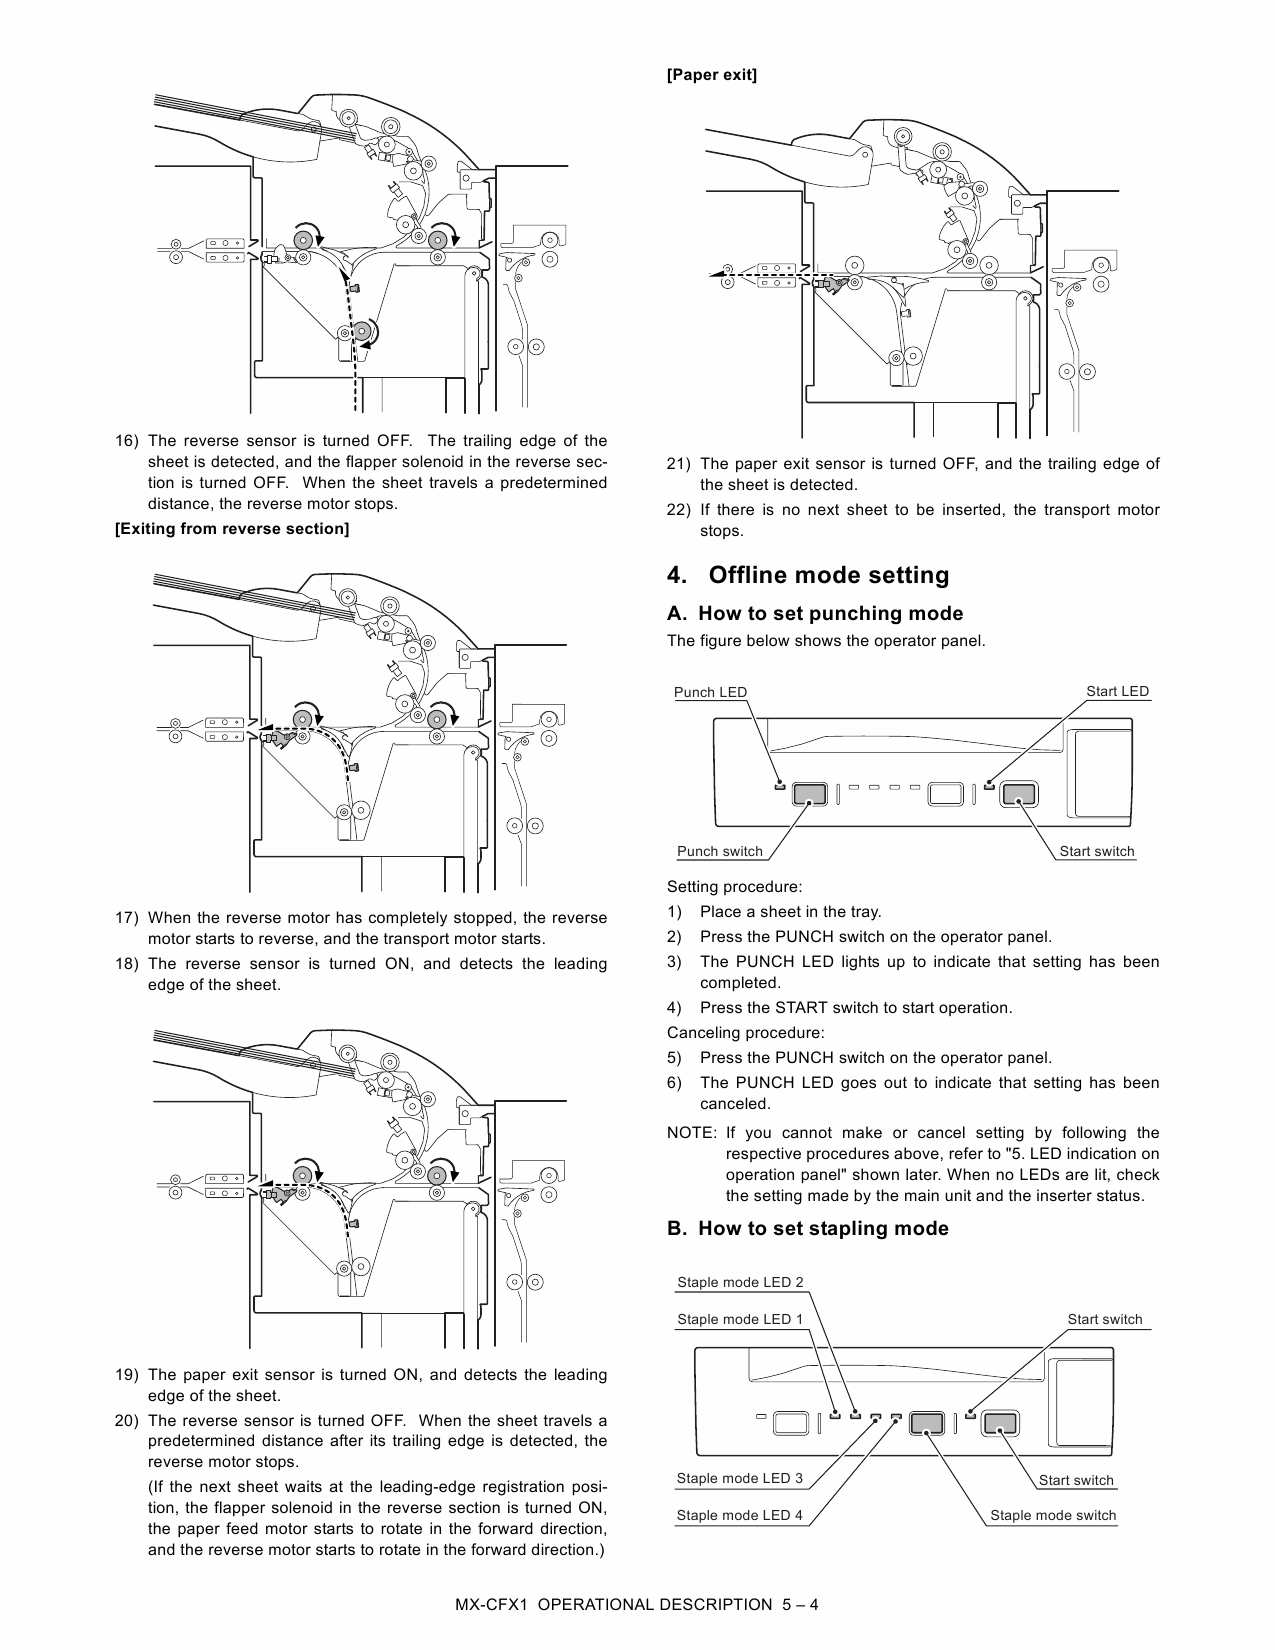 SHARP MX CFX1 Service Manual-3